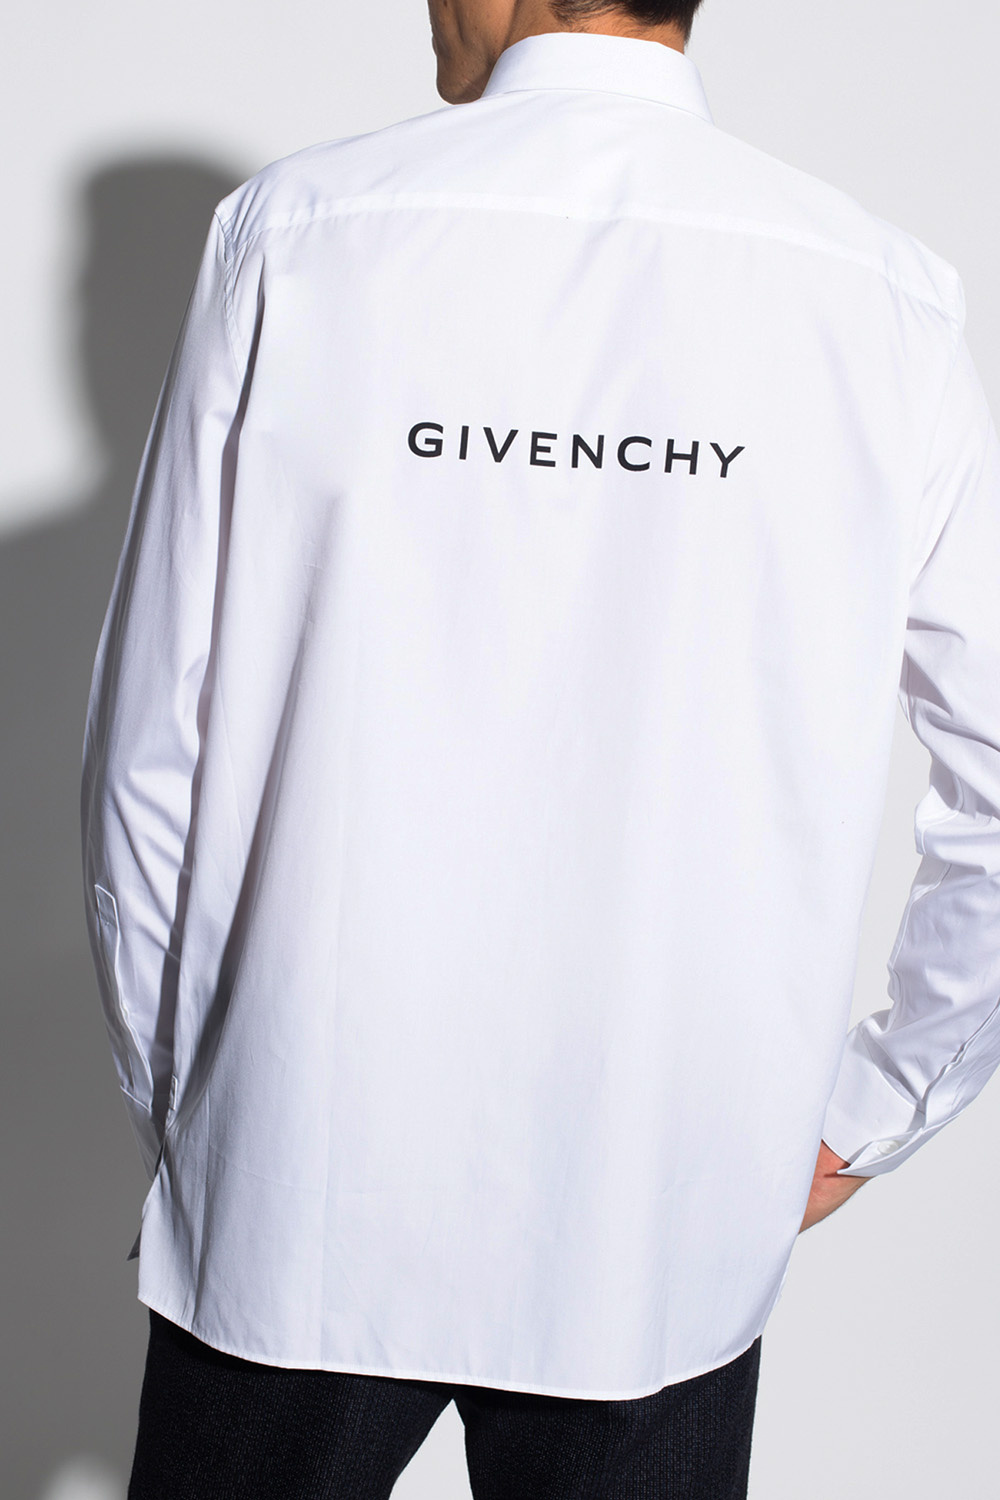 Givenchy GIVENCHY KEY LANYARD WITH LOGO